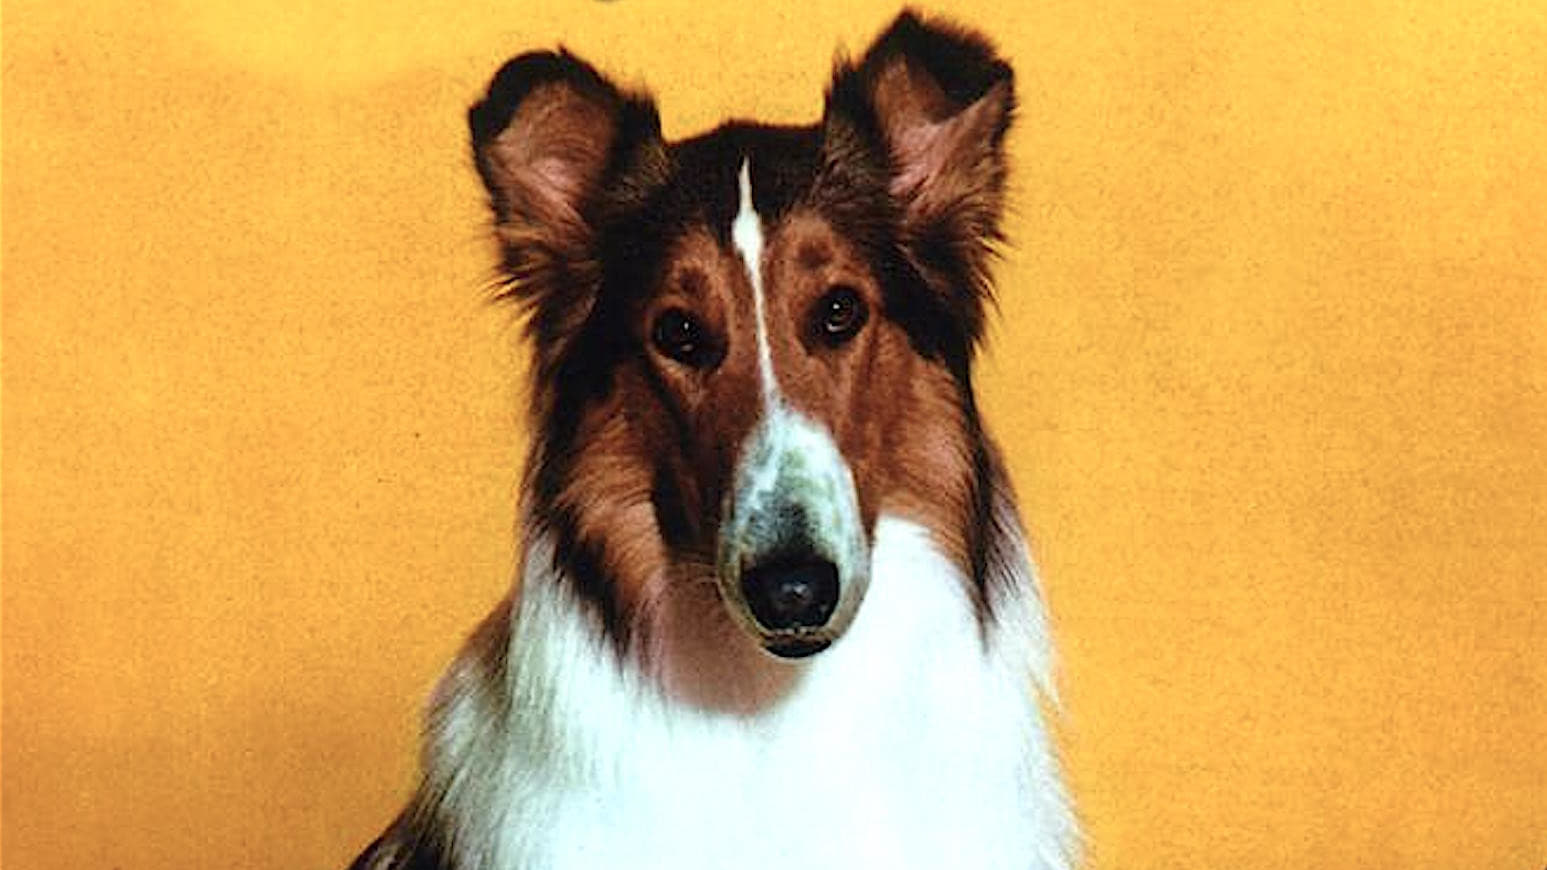 Lassie: The New Beginning